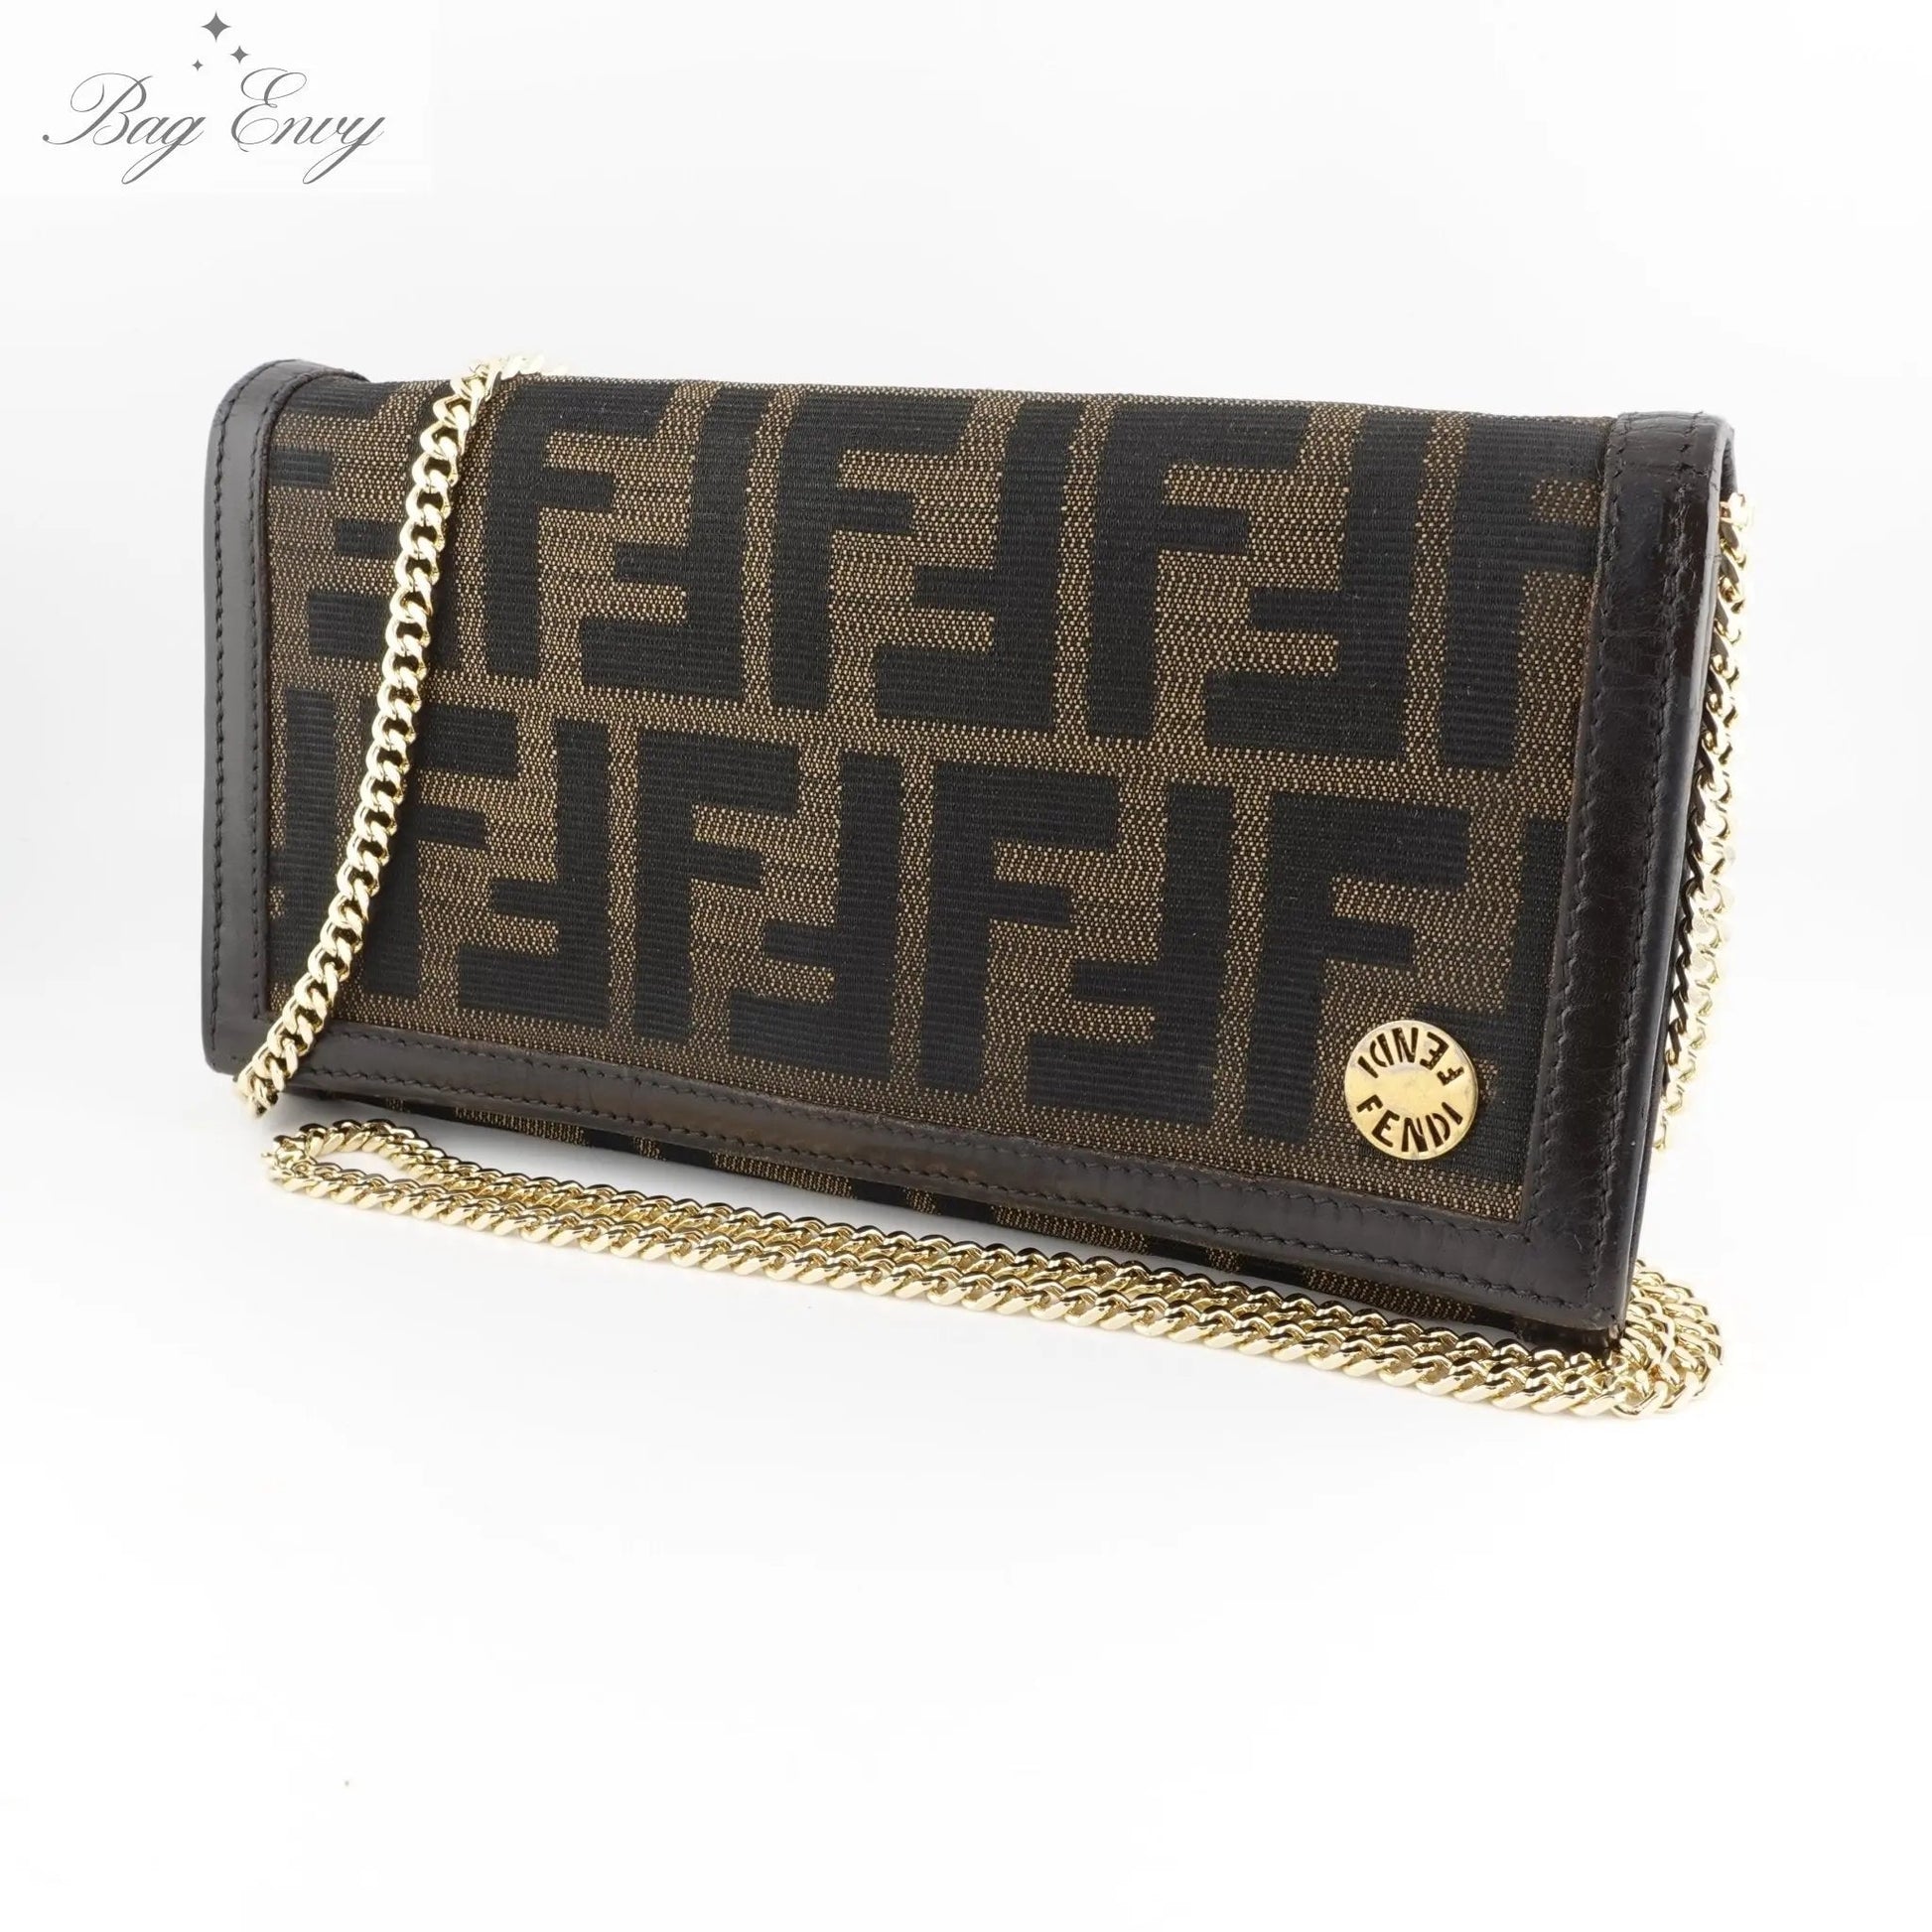 FENDI Zucca Wallet on Chain - Bag Envy